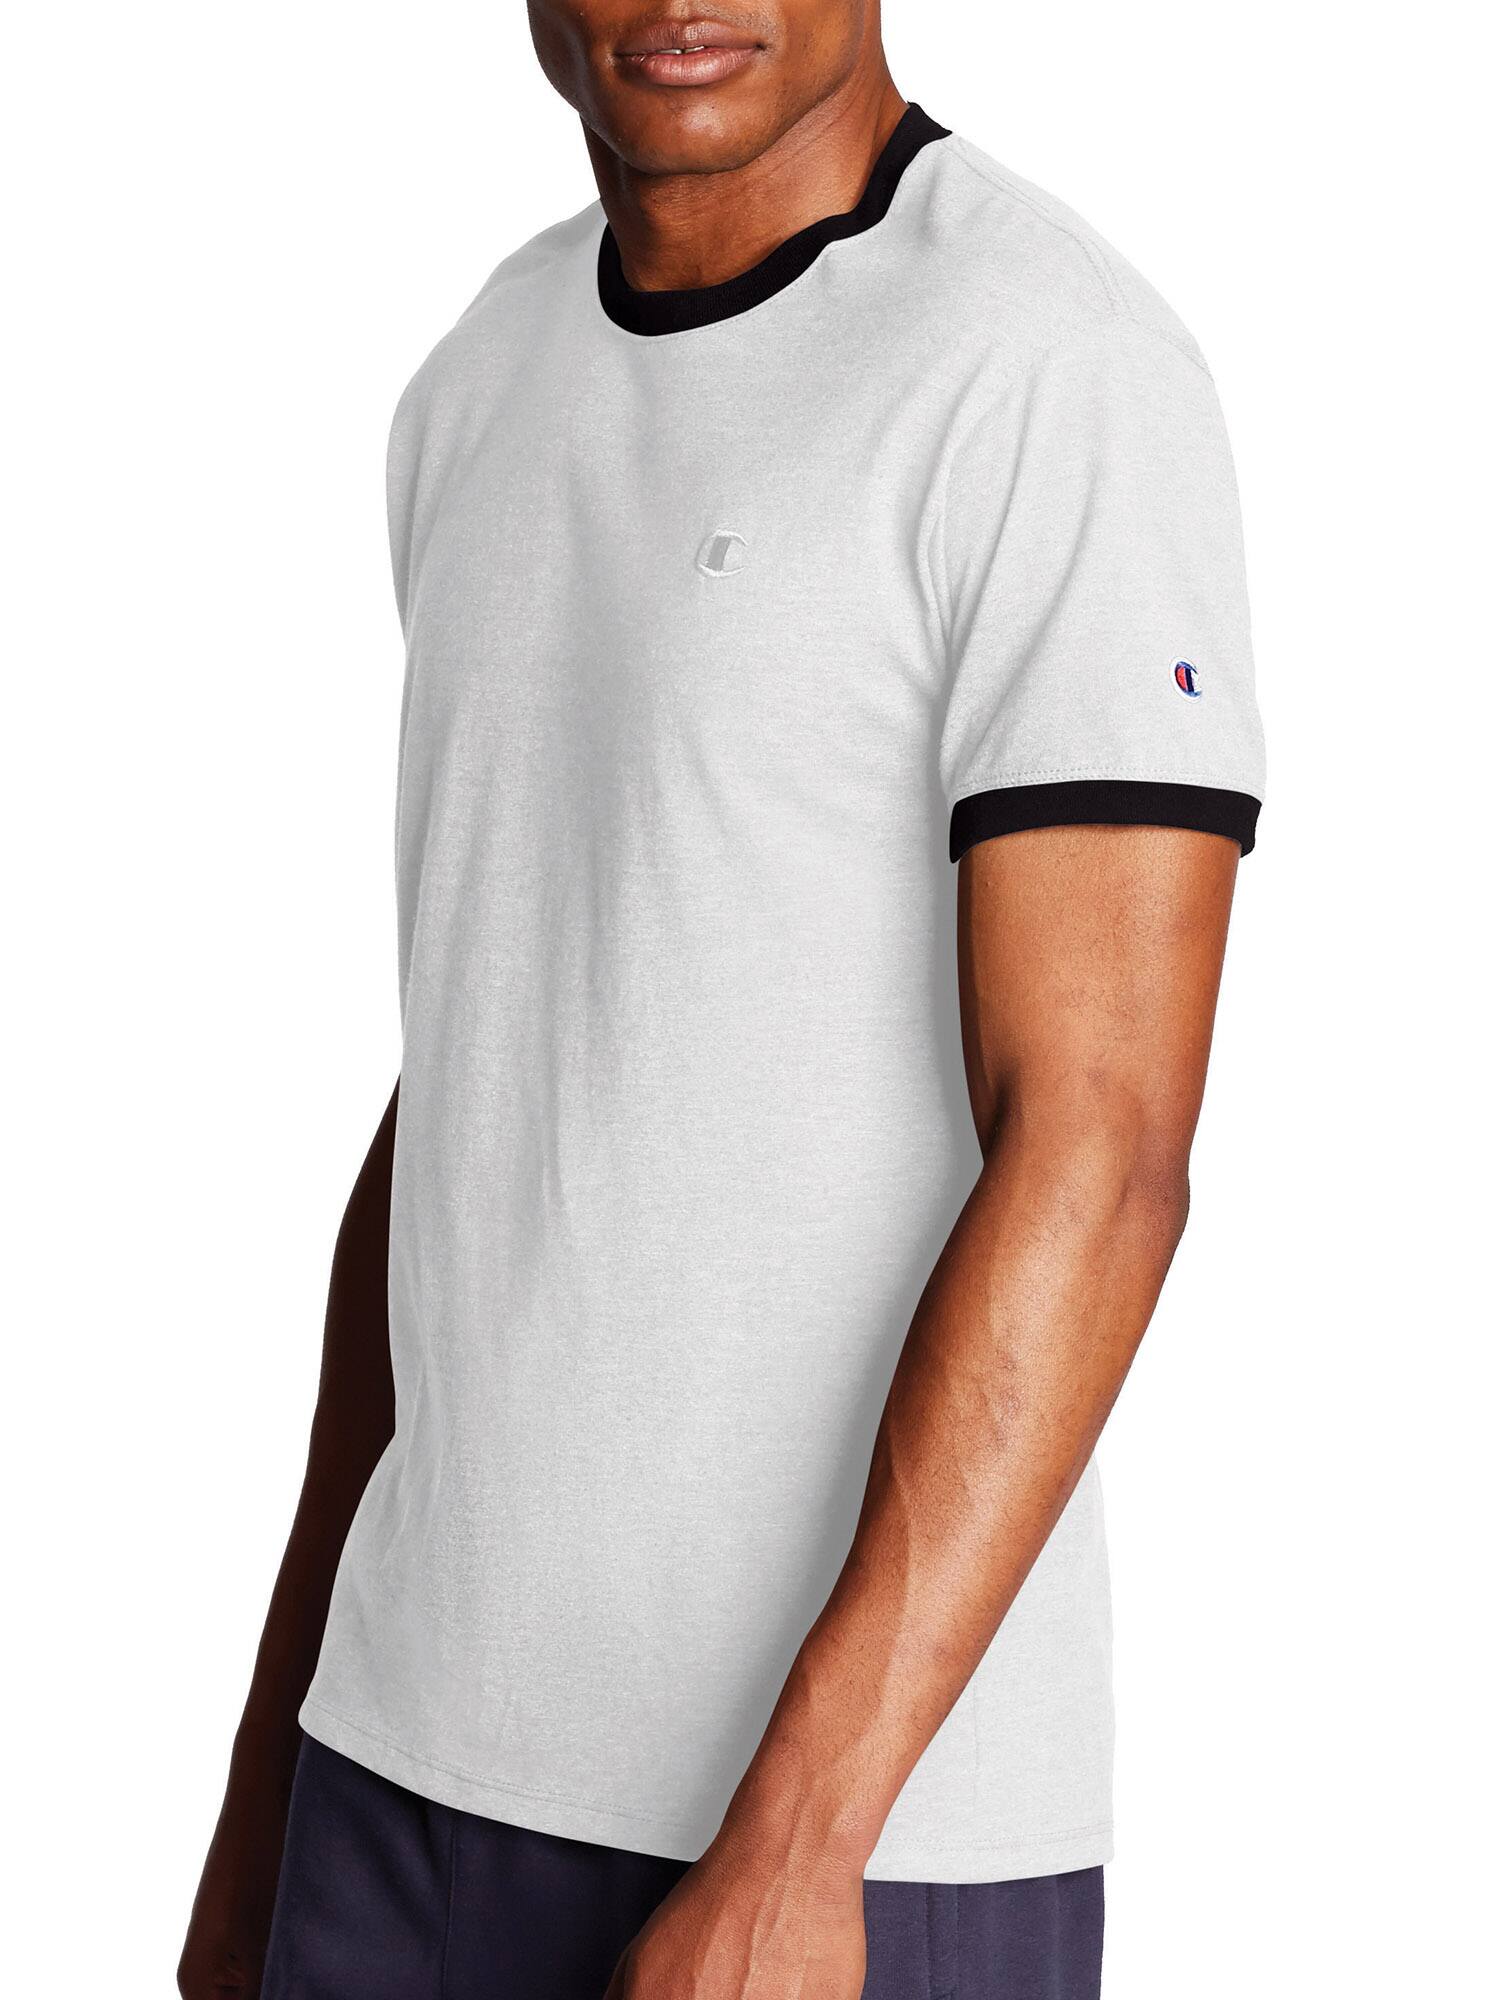 Champion Men's Classic Jersey Ringer T-Shirt (White/Navy) $8 + Free S&H w/ Walmart+ or $35+